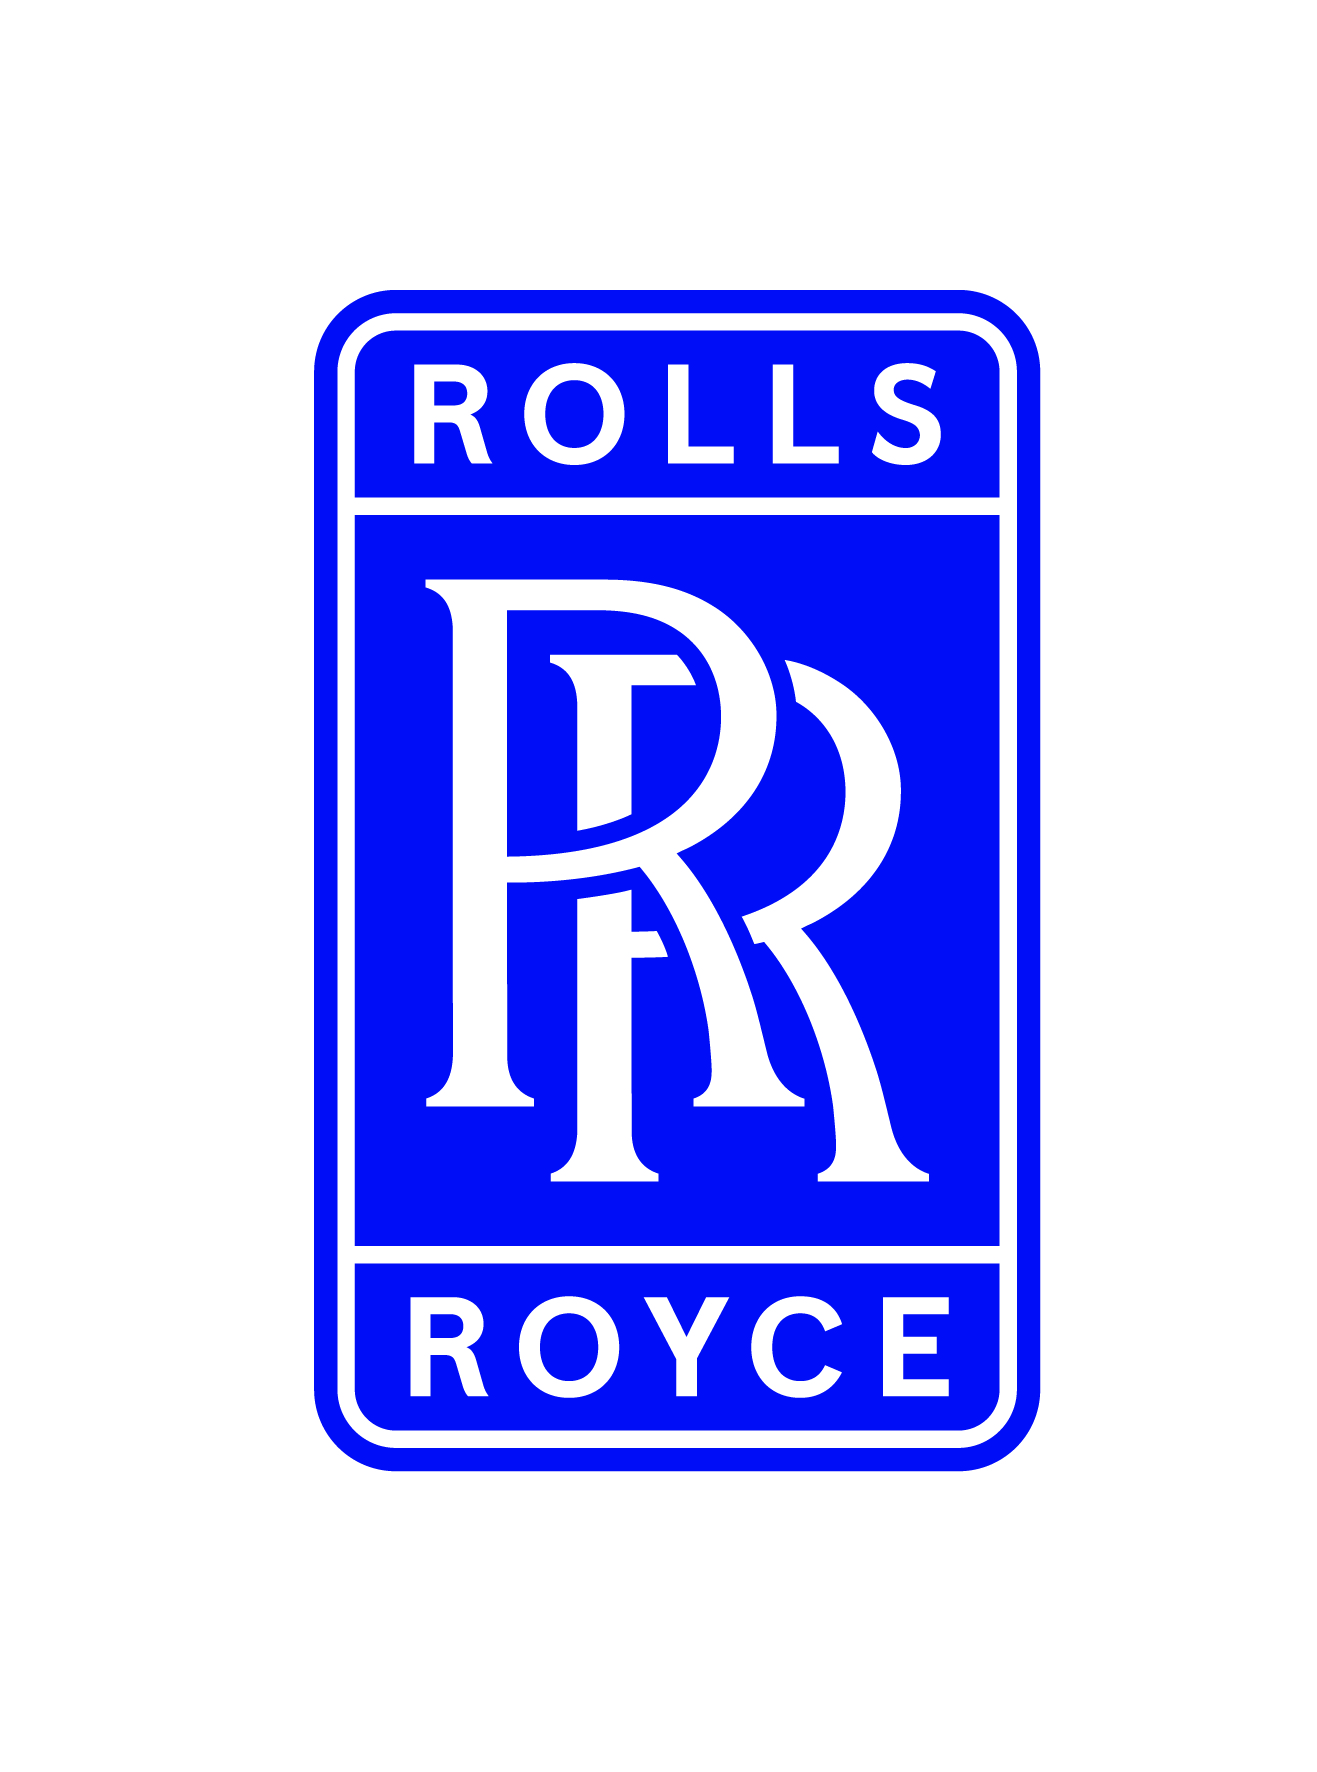 Rolls Royce Trent 1000: ZERO AOG MILESTONE IS REACHED